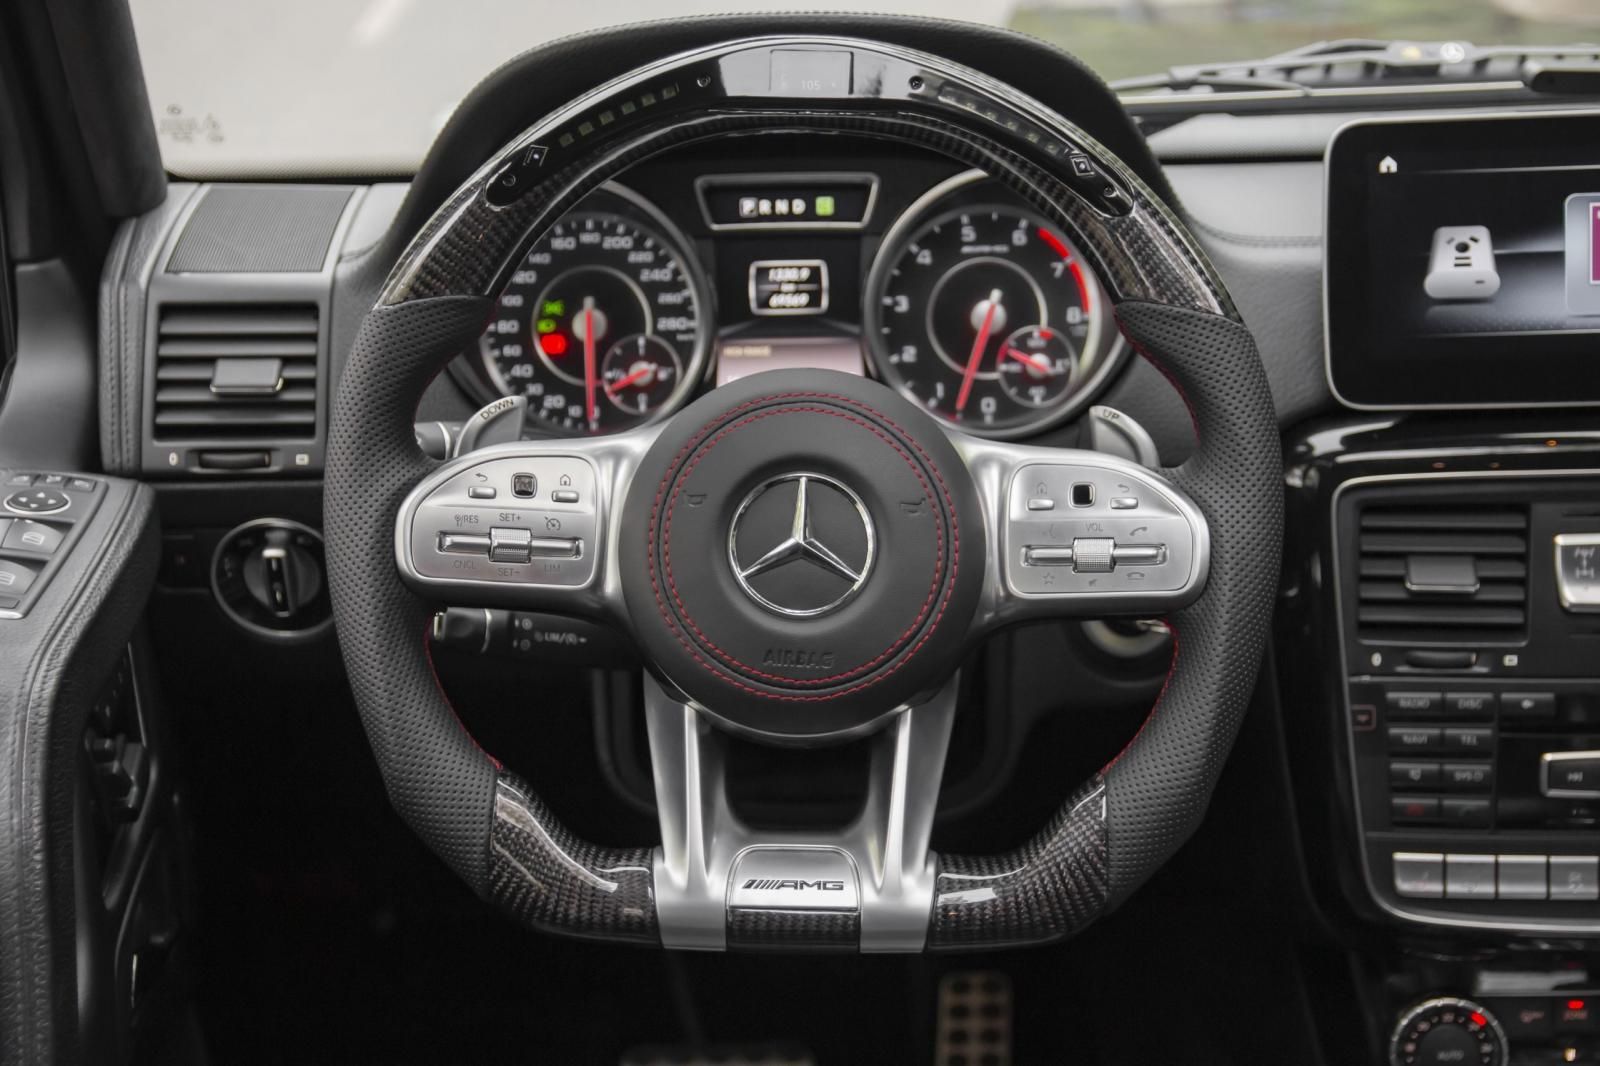 Mercedes-Benz G63 2014 - Mới đi 69.000km